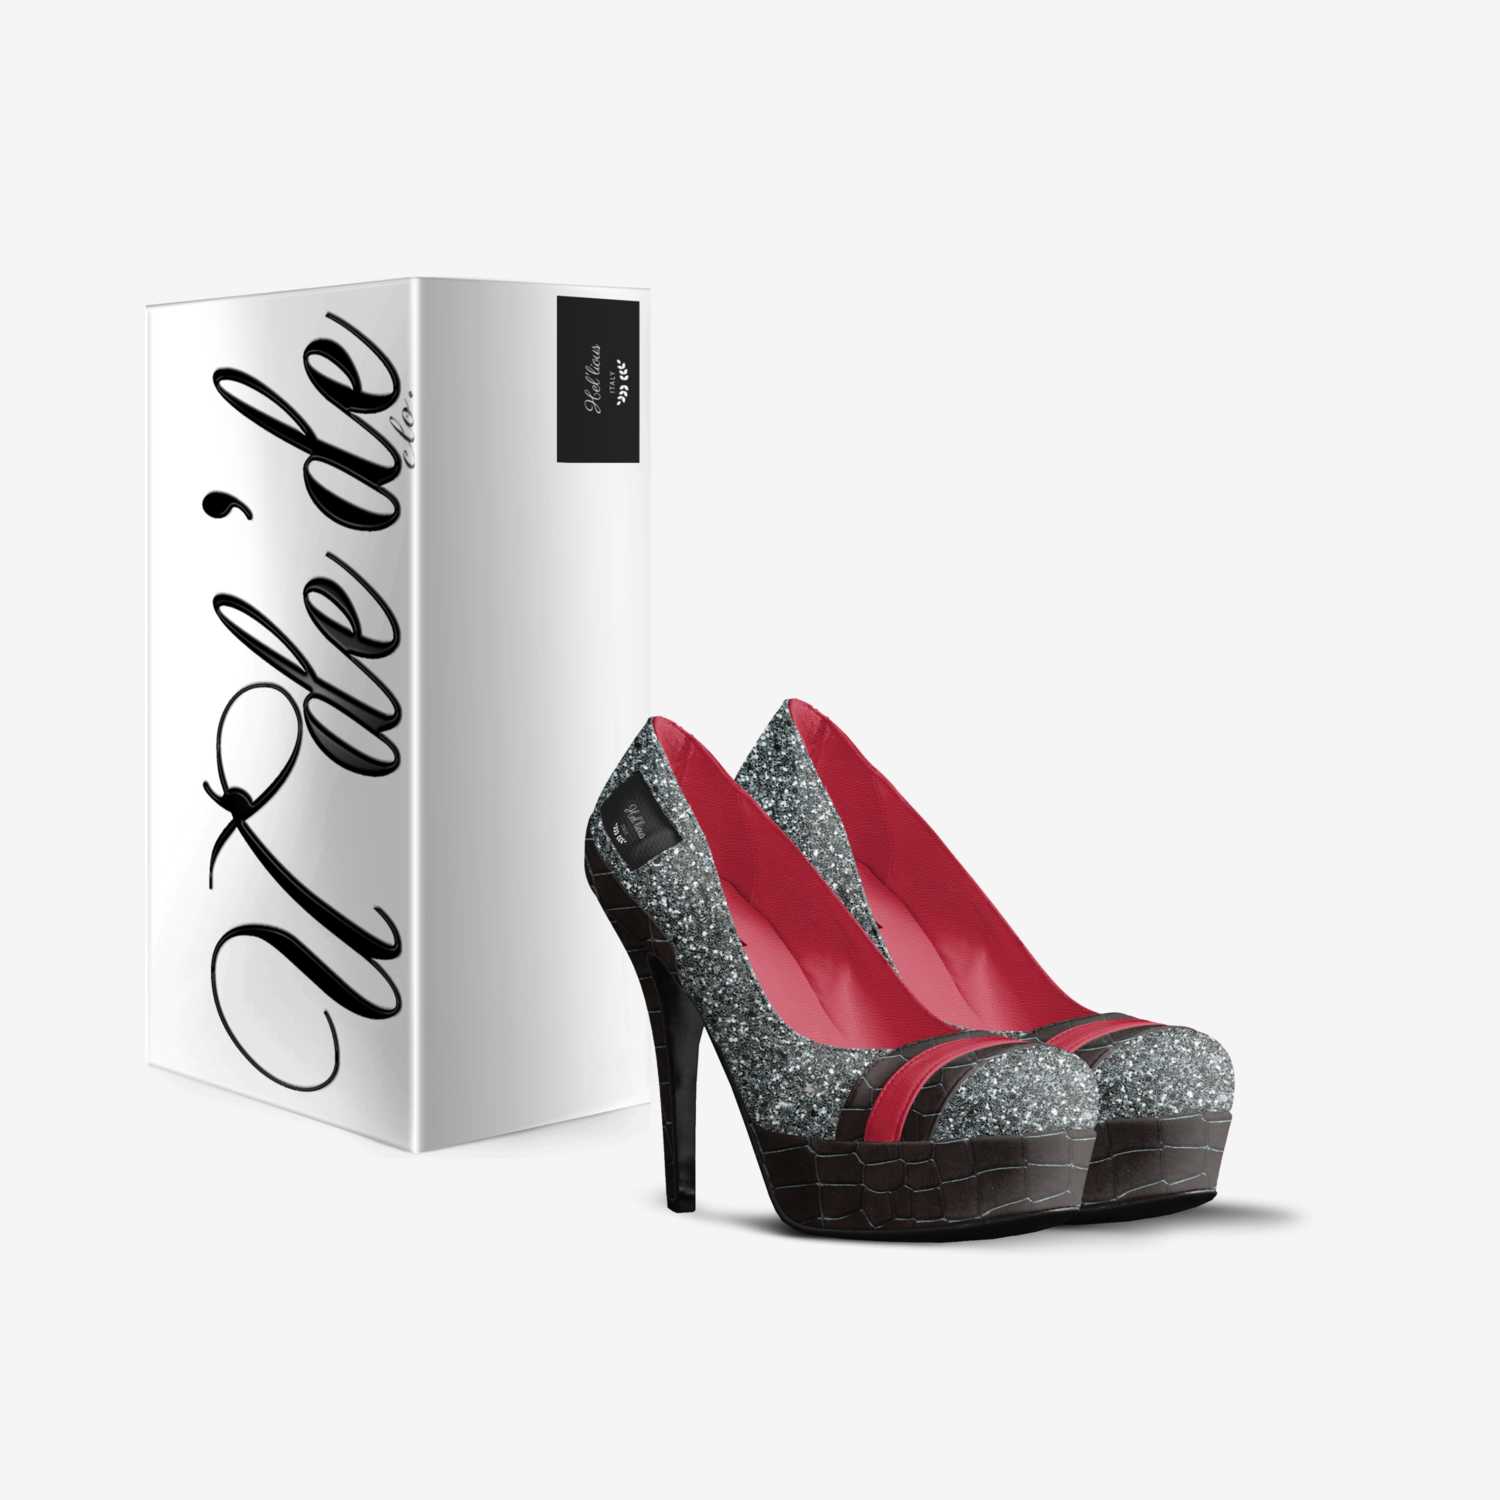 U'DE'DE Hel'lious custom made in Italy shoes by Demaria Simmons | Box view